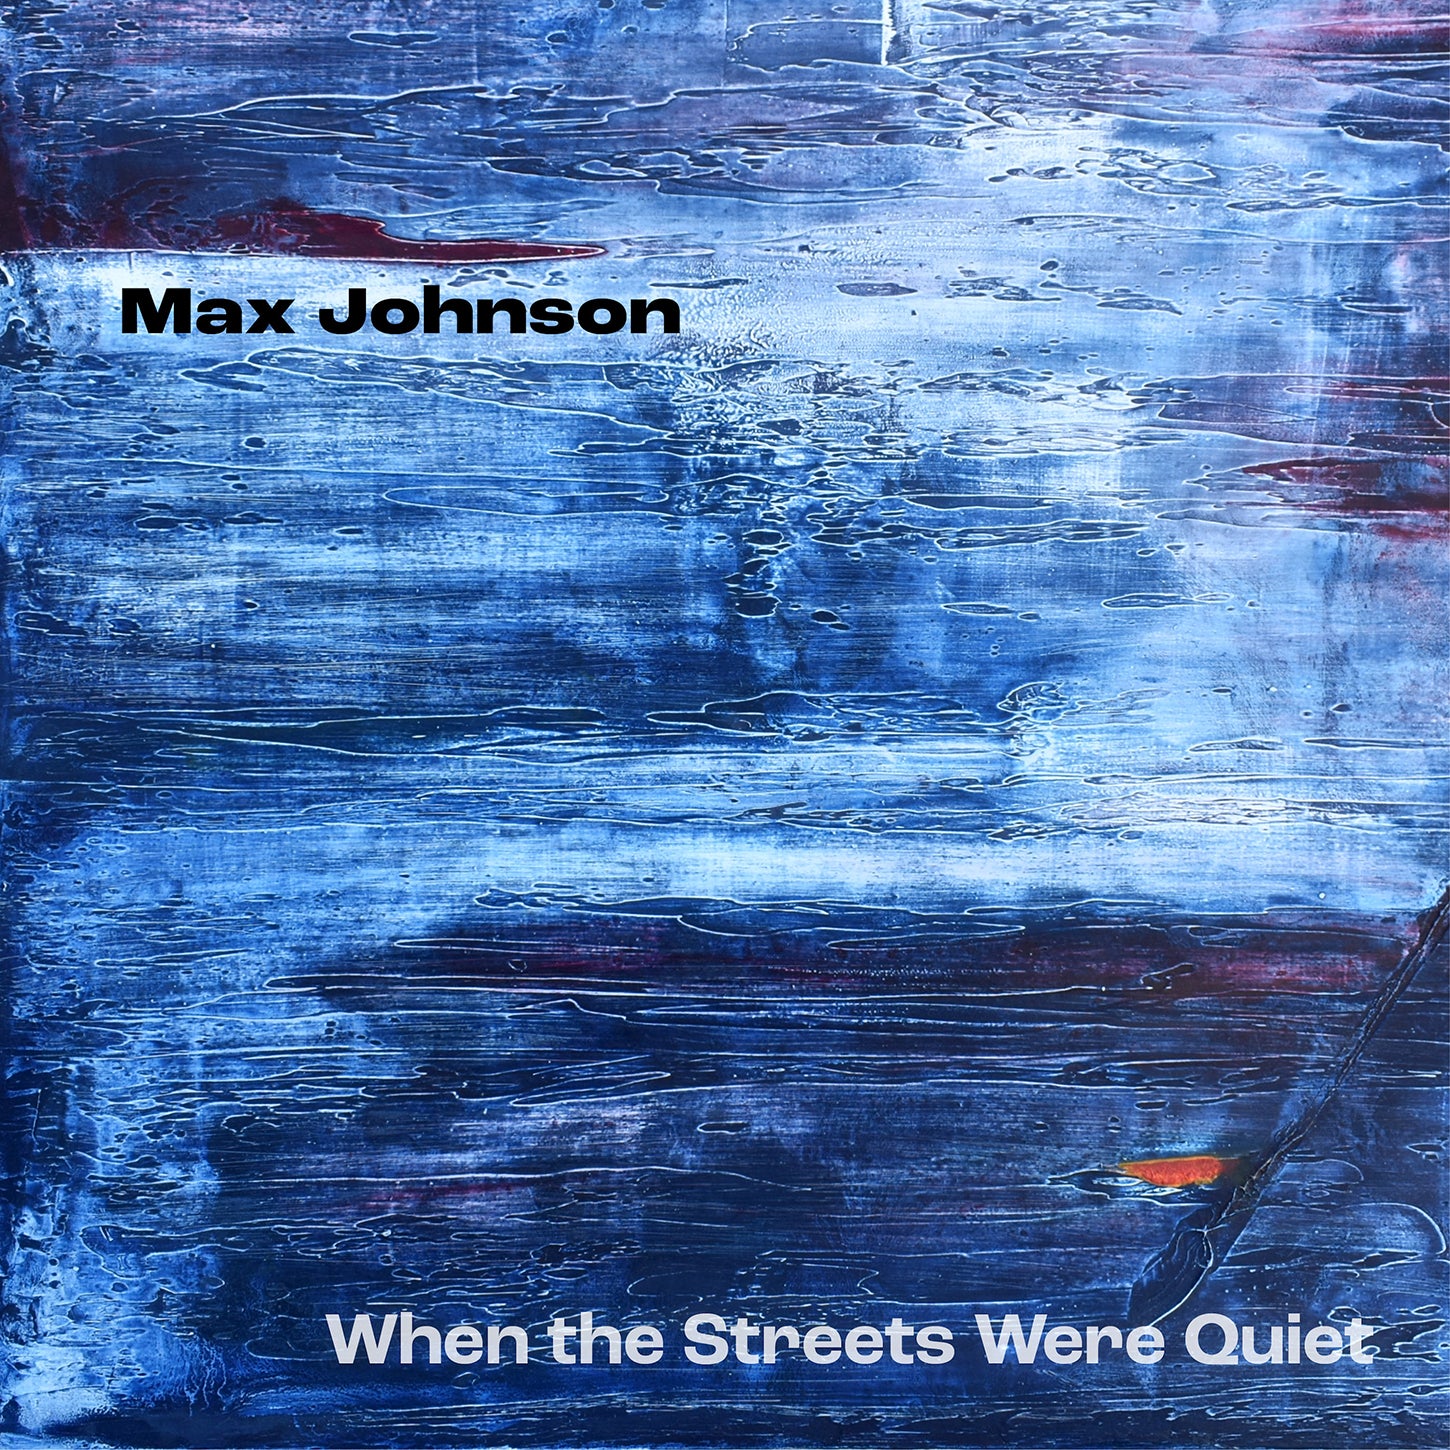 Max Johnson: When the Streets Were Quiet